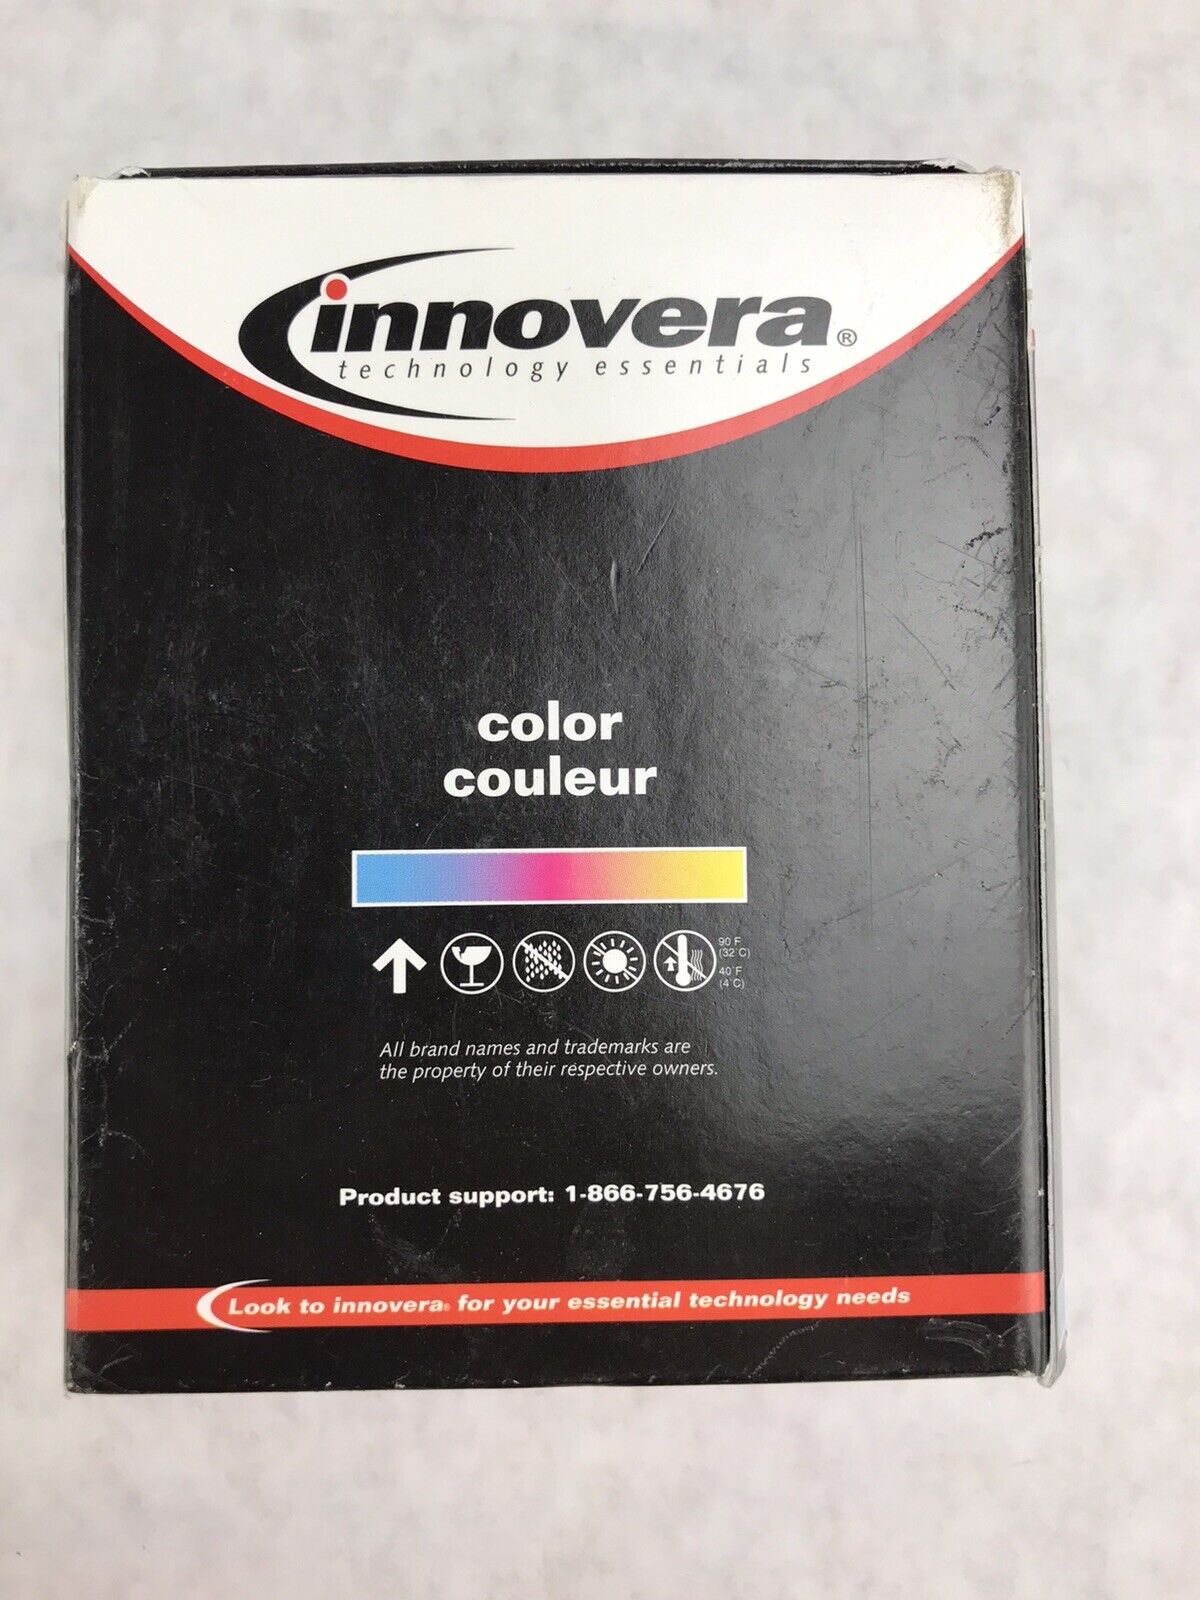 Innovera Color Ink Cartridge HP 940XL Cyan C4903AN C4907AN